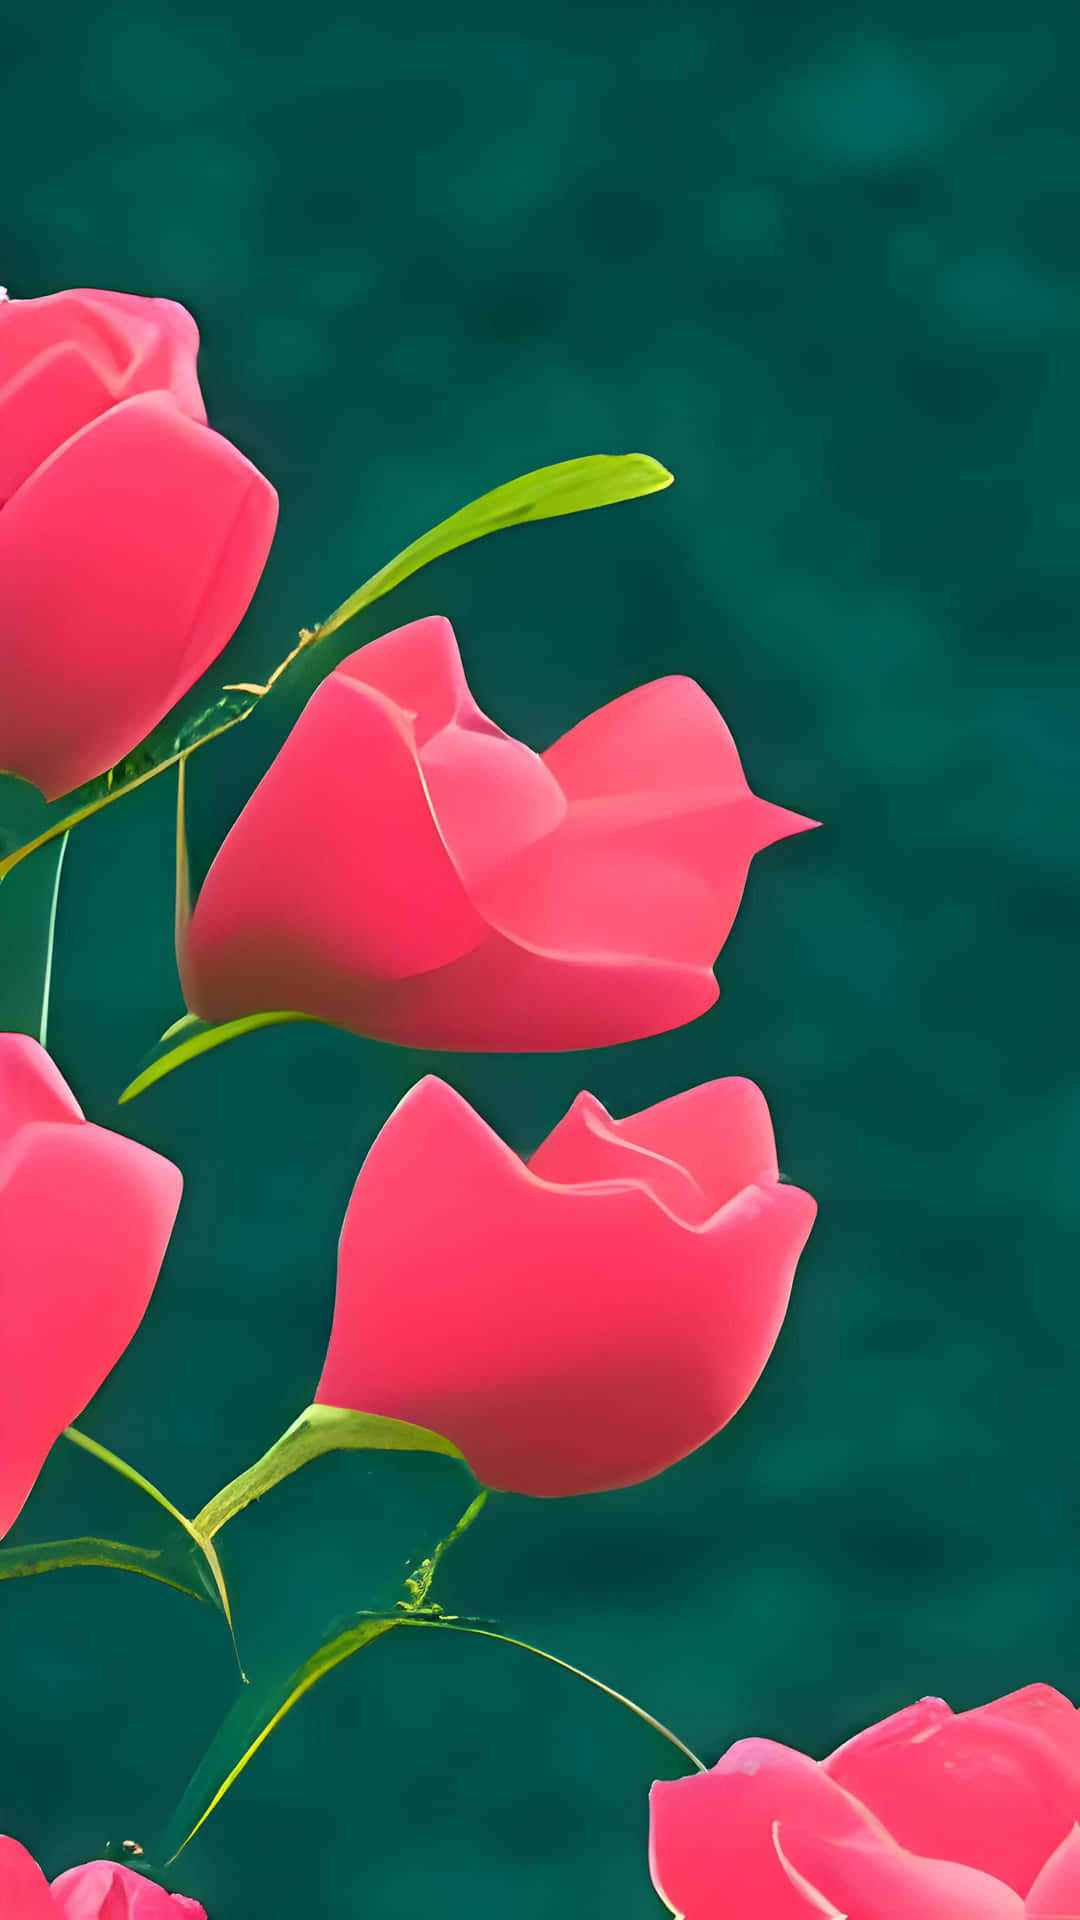 Abstract Pink Roses Digital Art Wallpaper